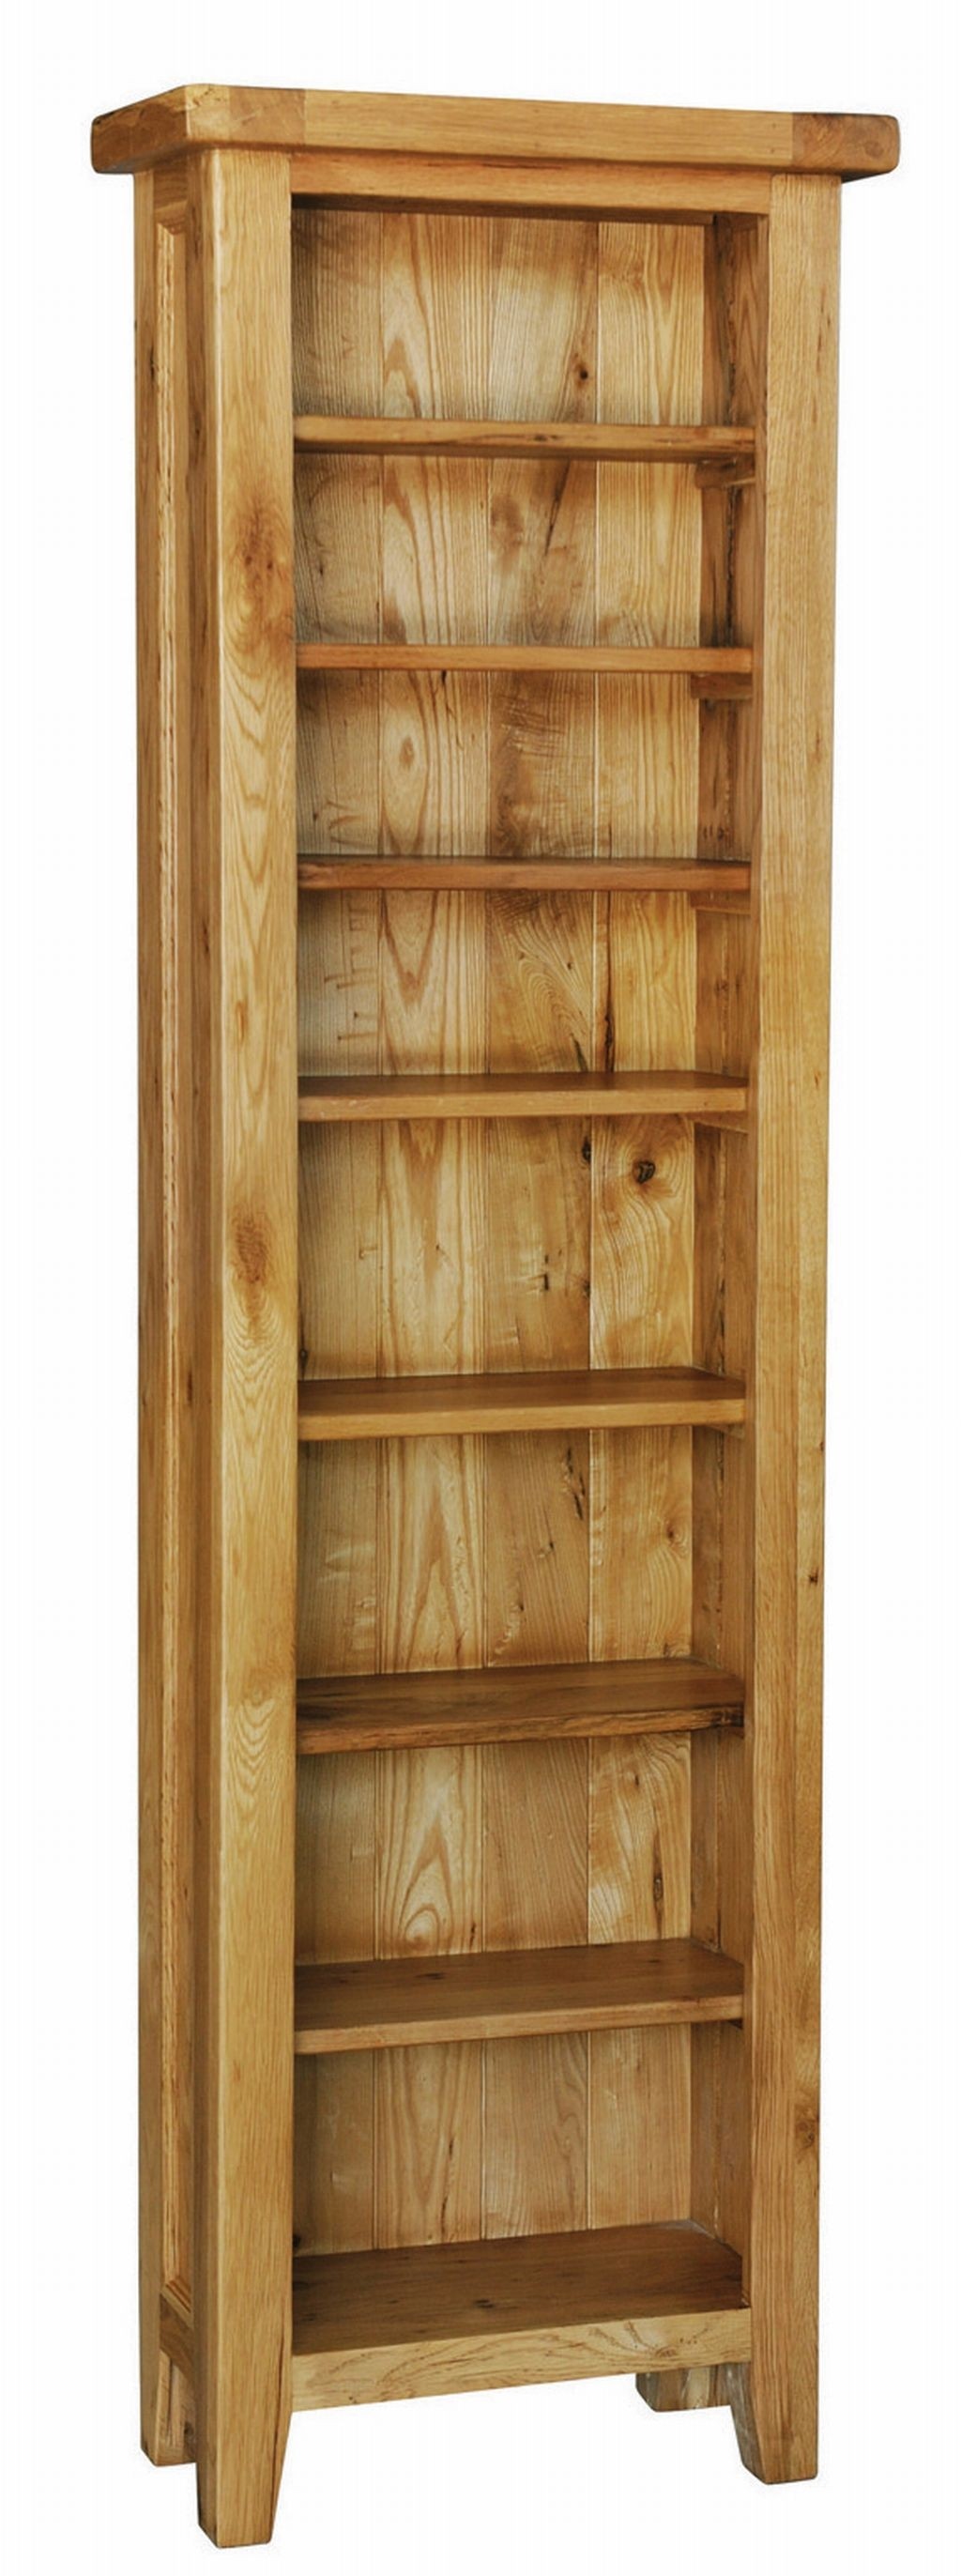 Solid oak furniture tall slim narrow bookcase rack cd dvd